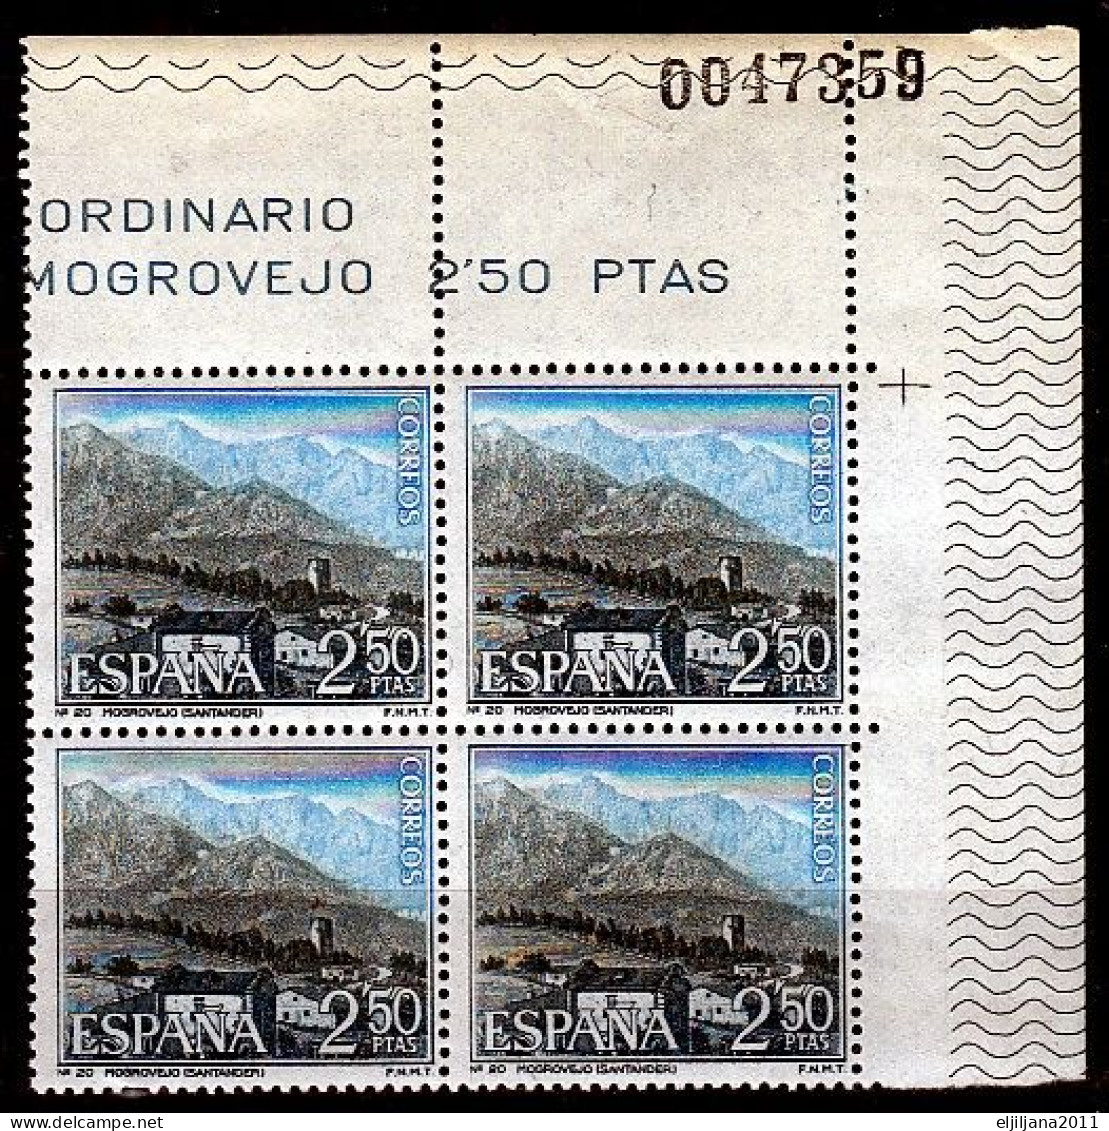 ⁕ SPAIN / ESPANA 1965 ⁕ Mogrovejo - Santander Mi.1589 ⁕ MNH Block Of 4 - Neufs